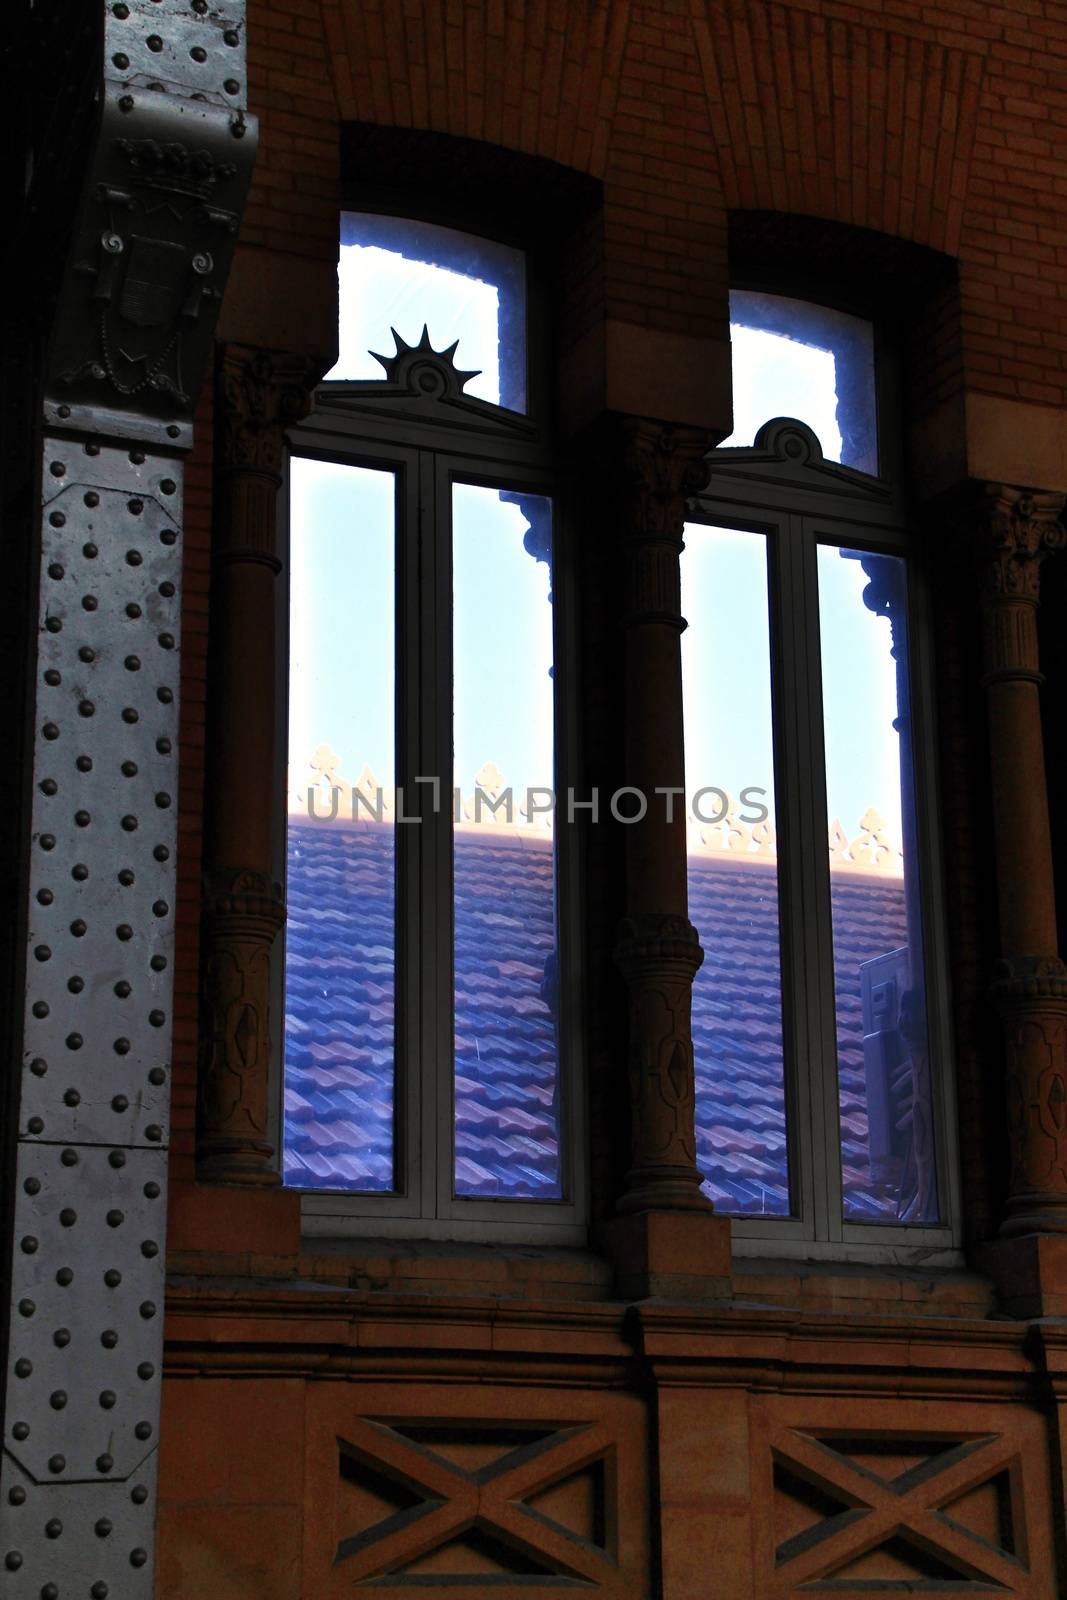 Windows Art deco style at Atocha train station in Madrid by soniabonet